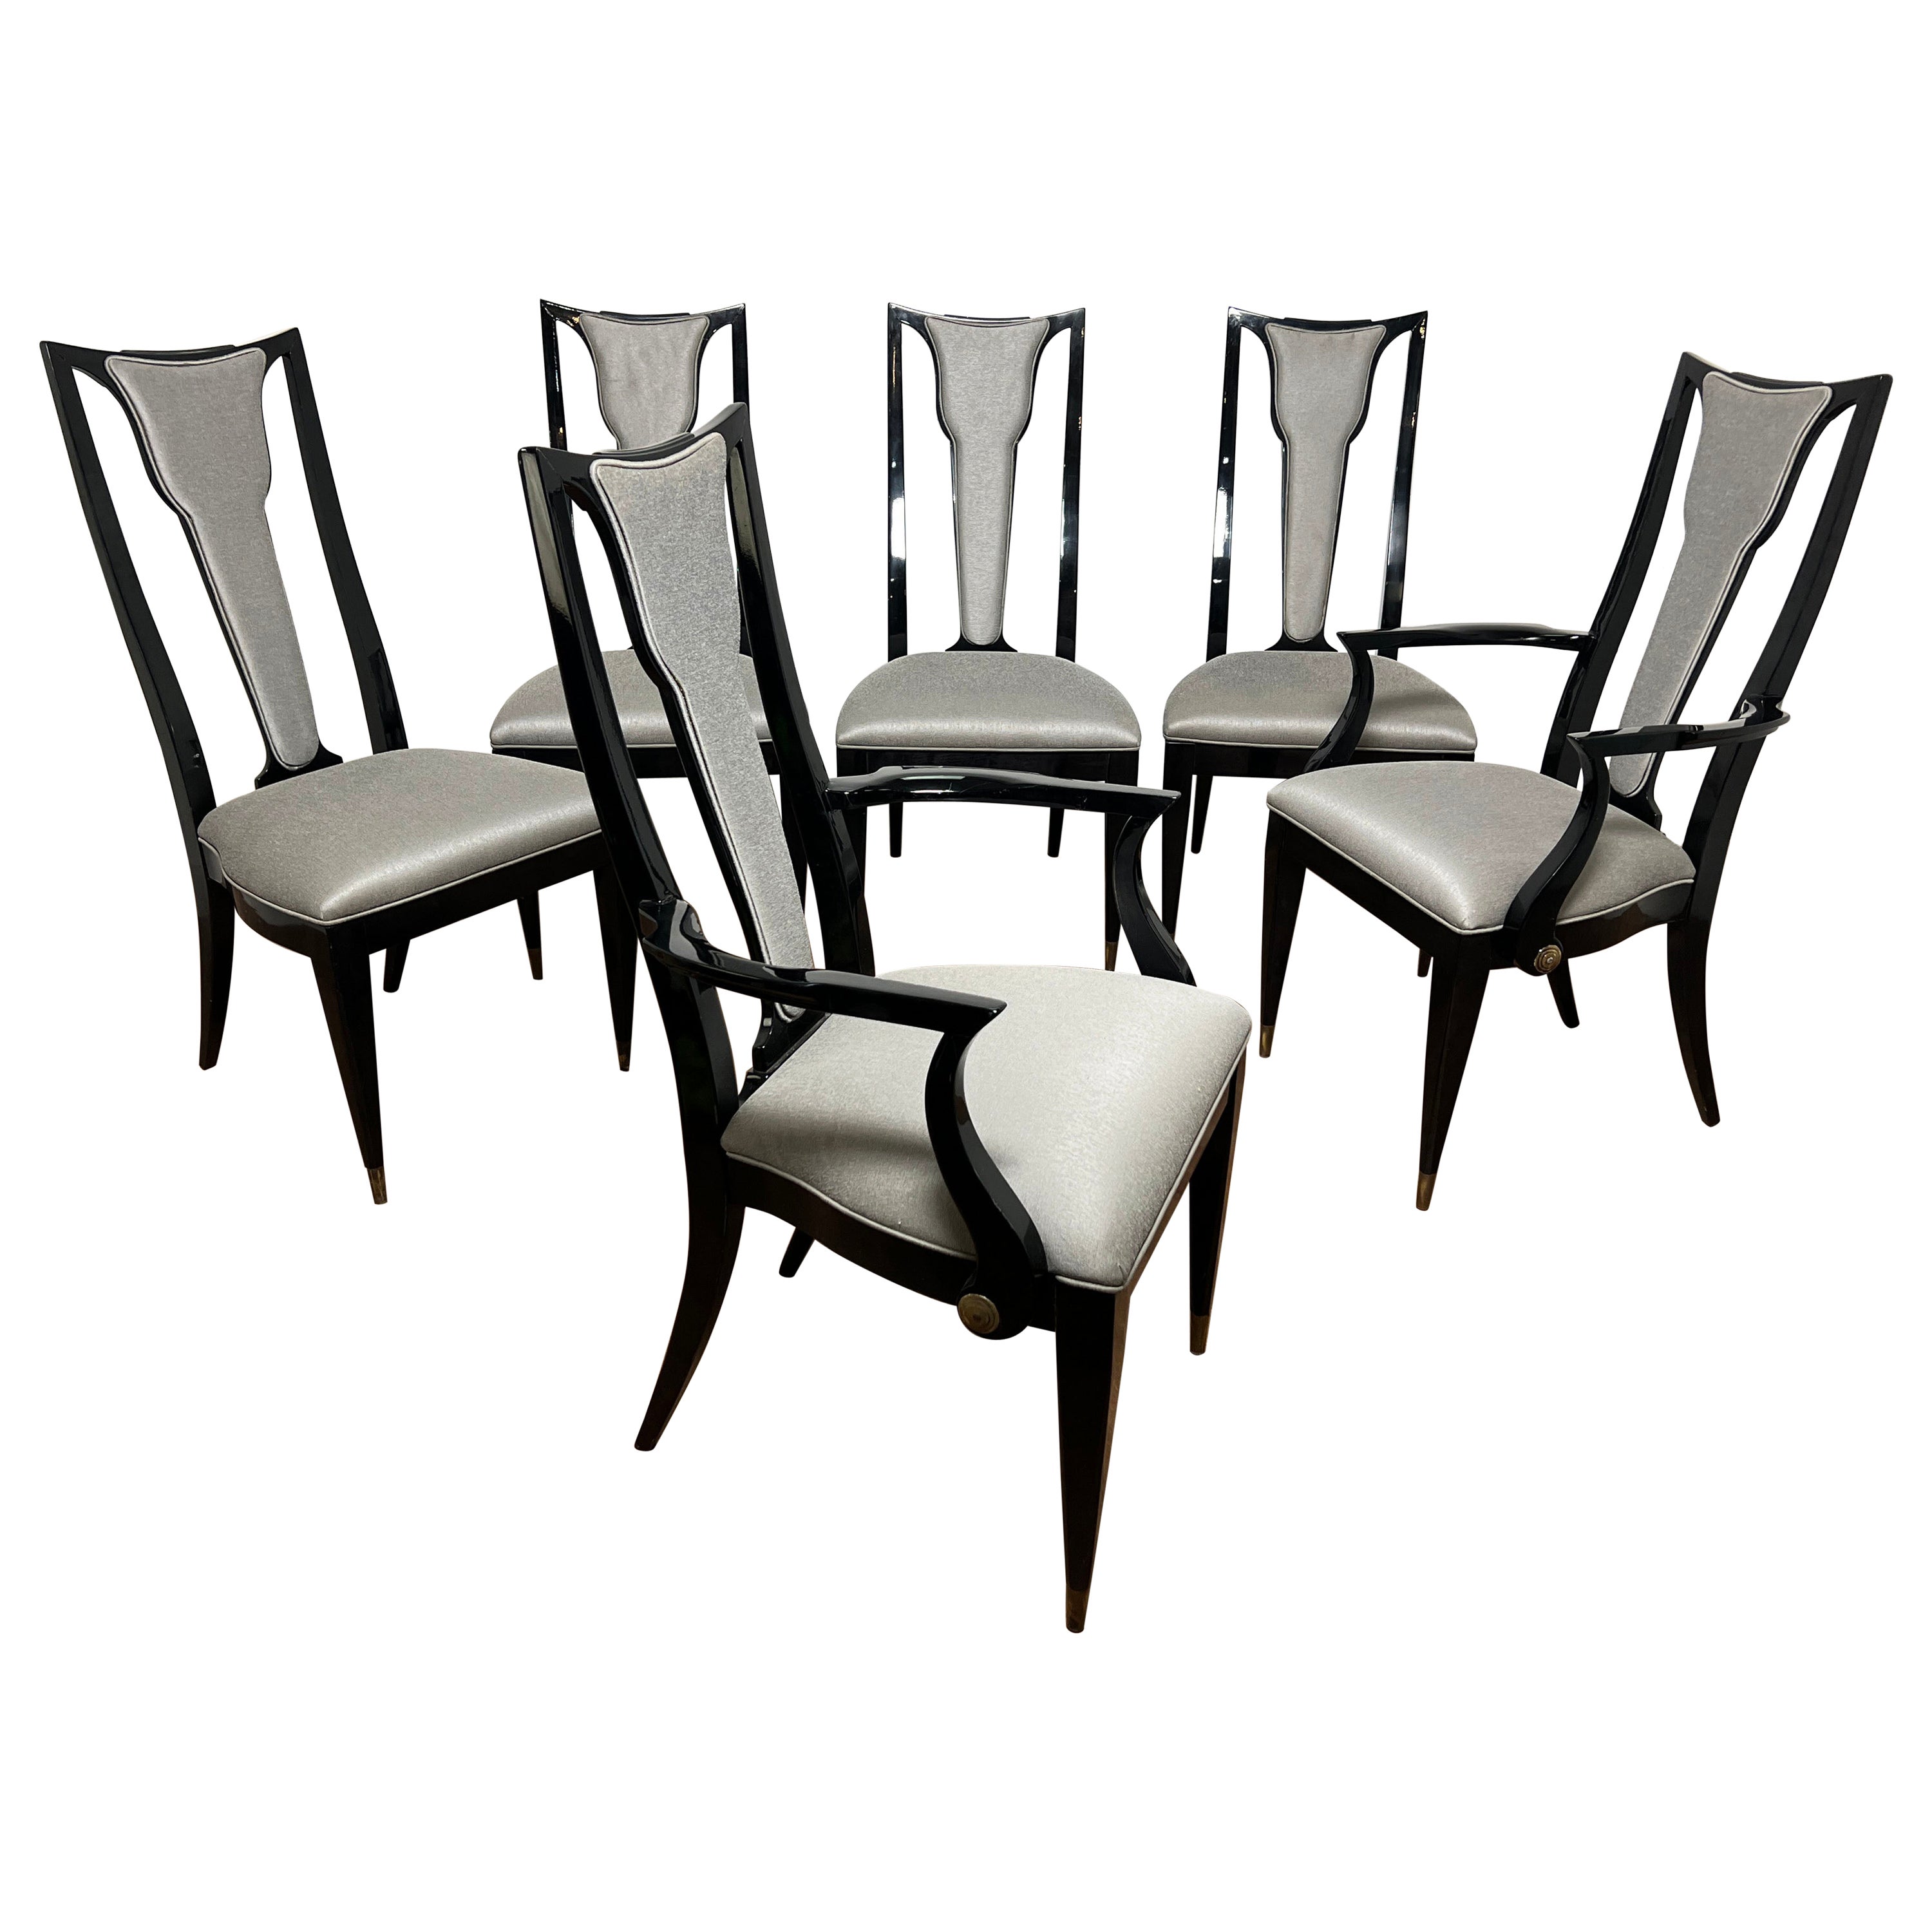 Set of Six Italian Modern Style Dining Chairs from Ryan Korban Interior